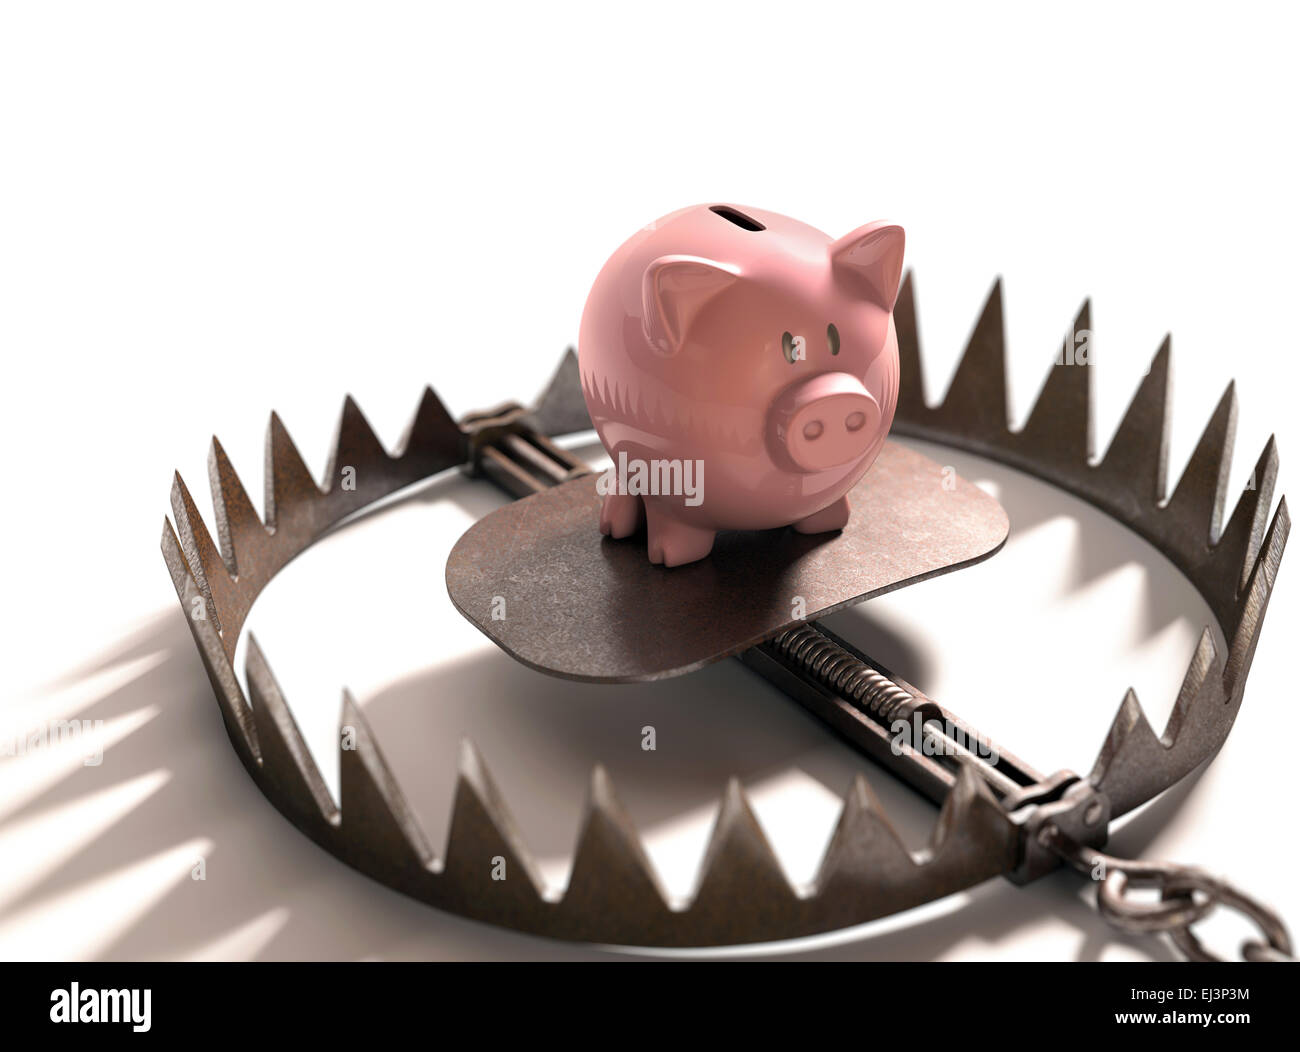 Animal trap with piggy bank, illustration Stock Photo